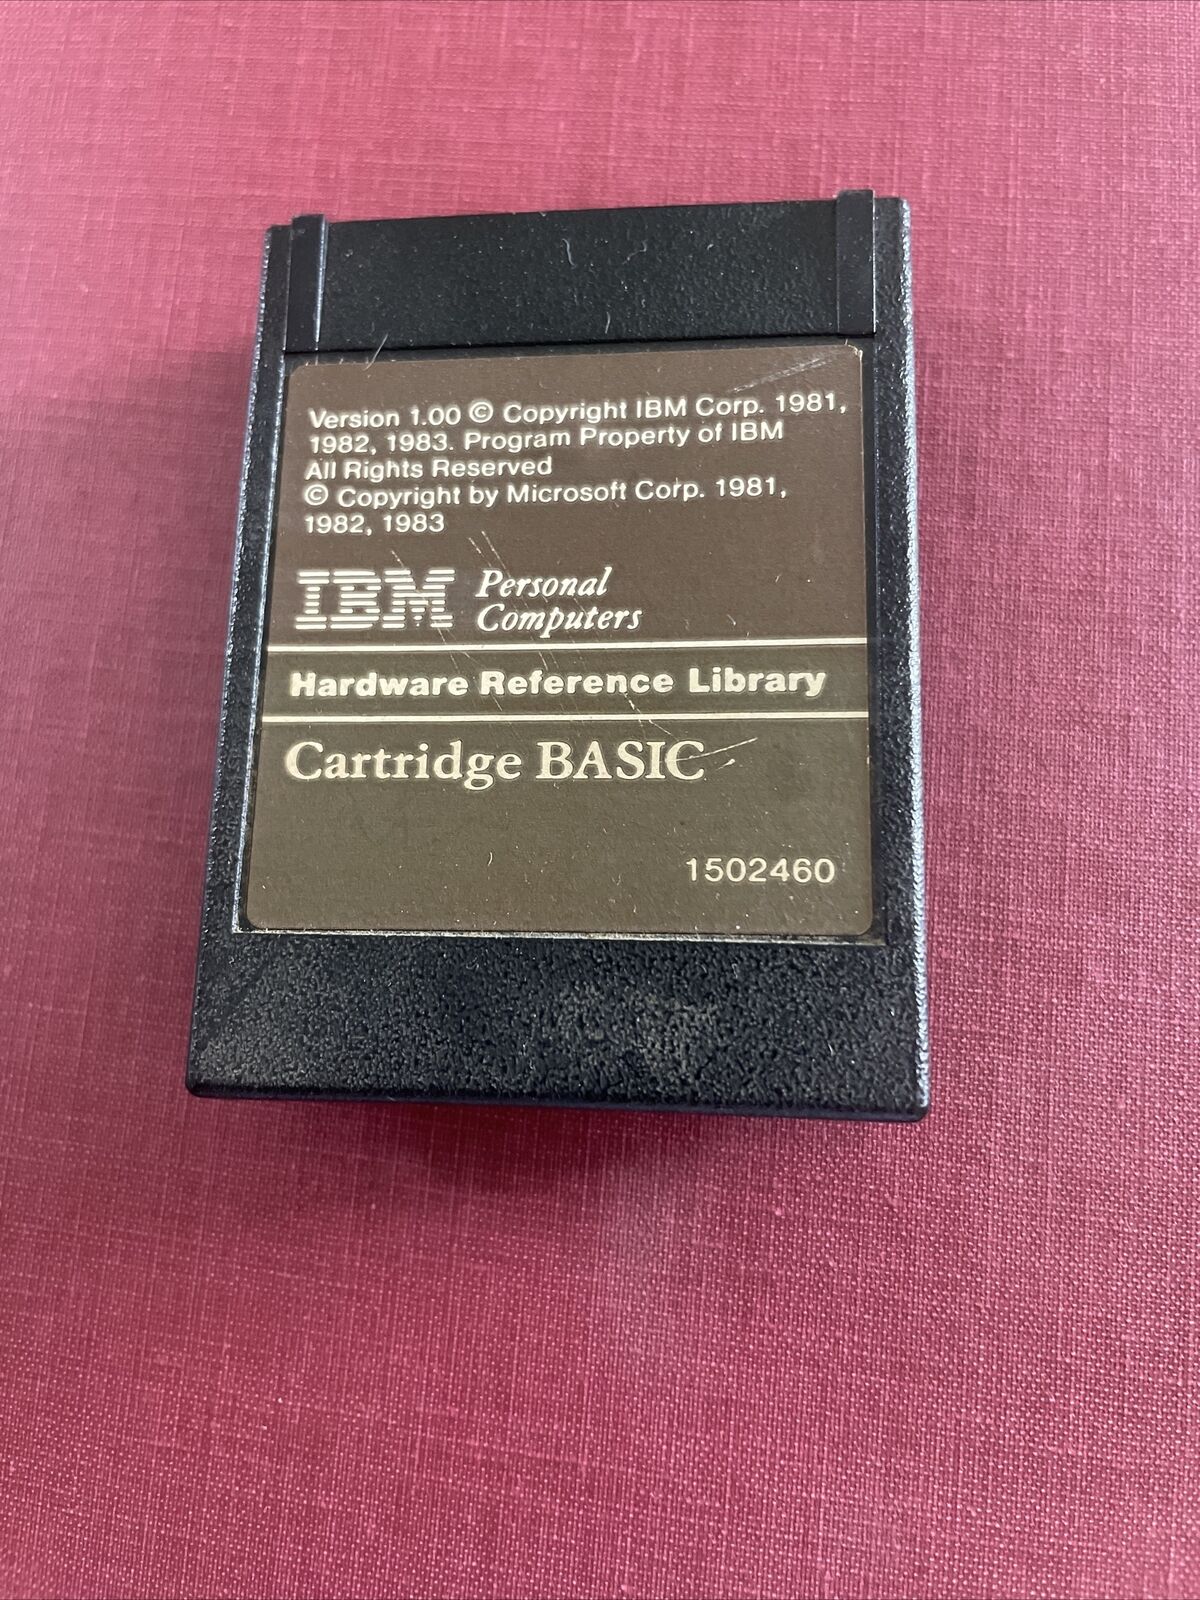 IBM Cartridge Basic 1.0 1982 1983 1502460